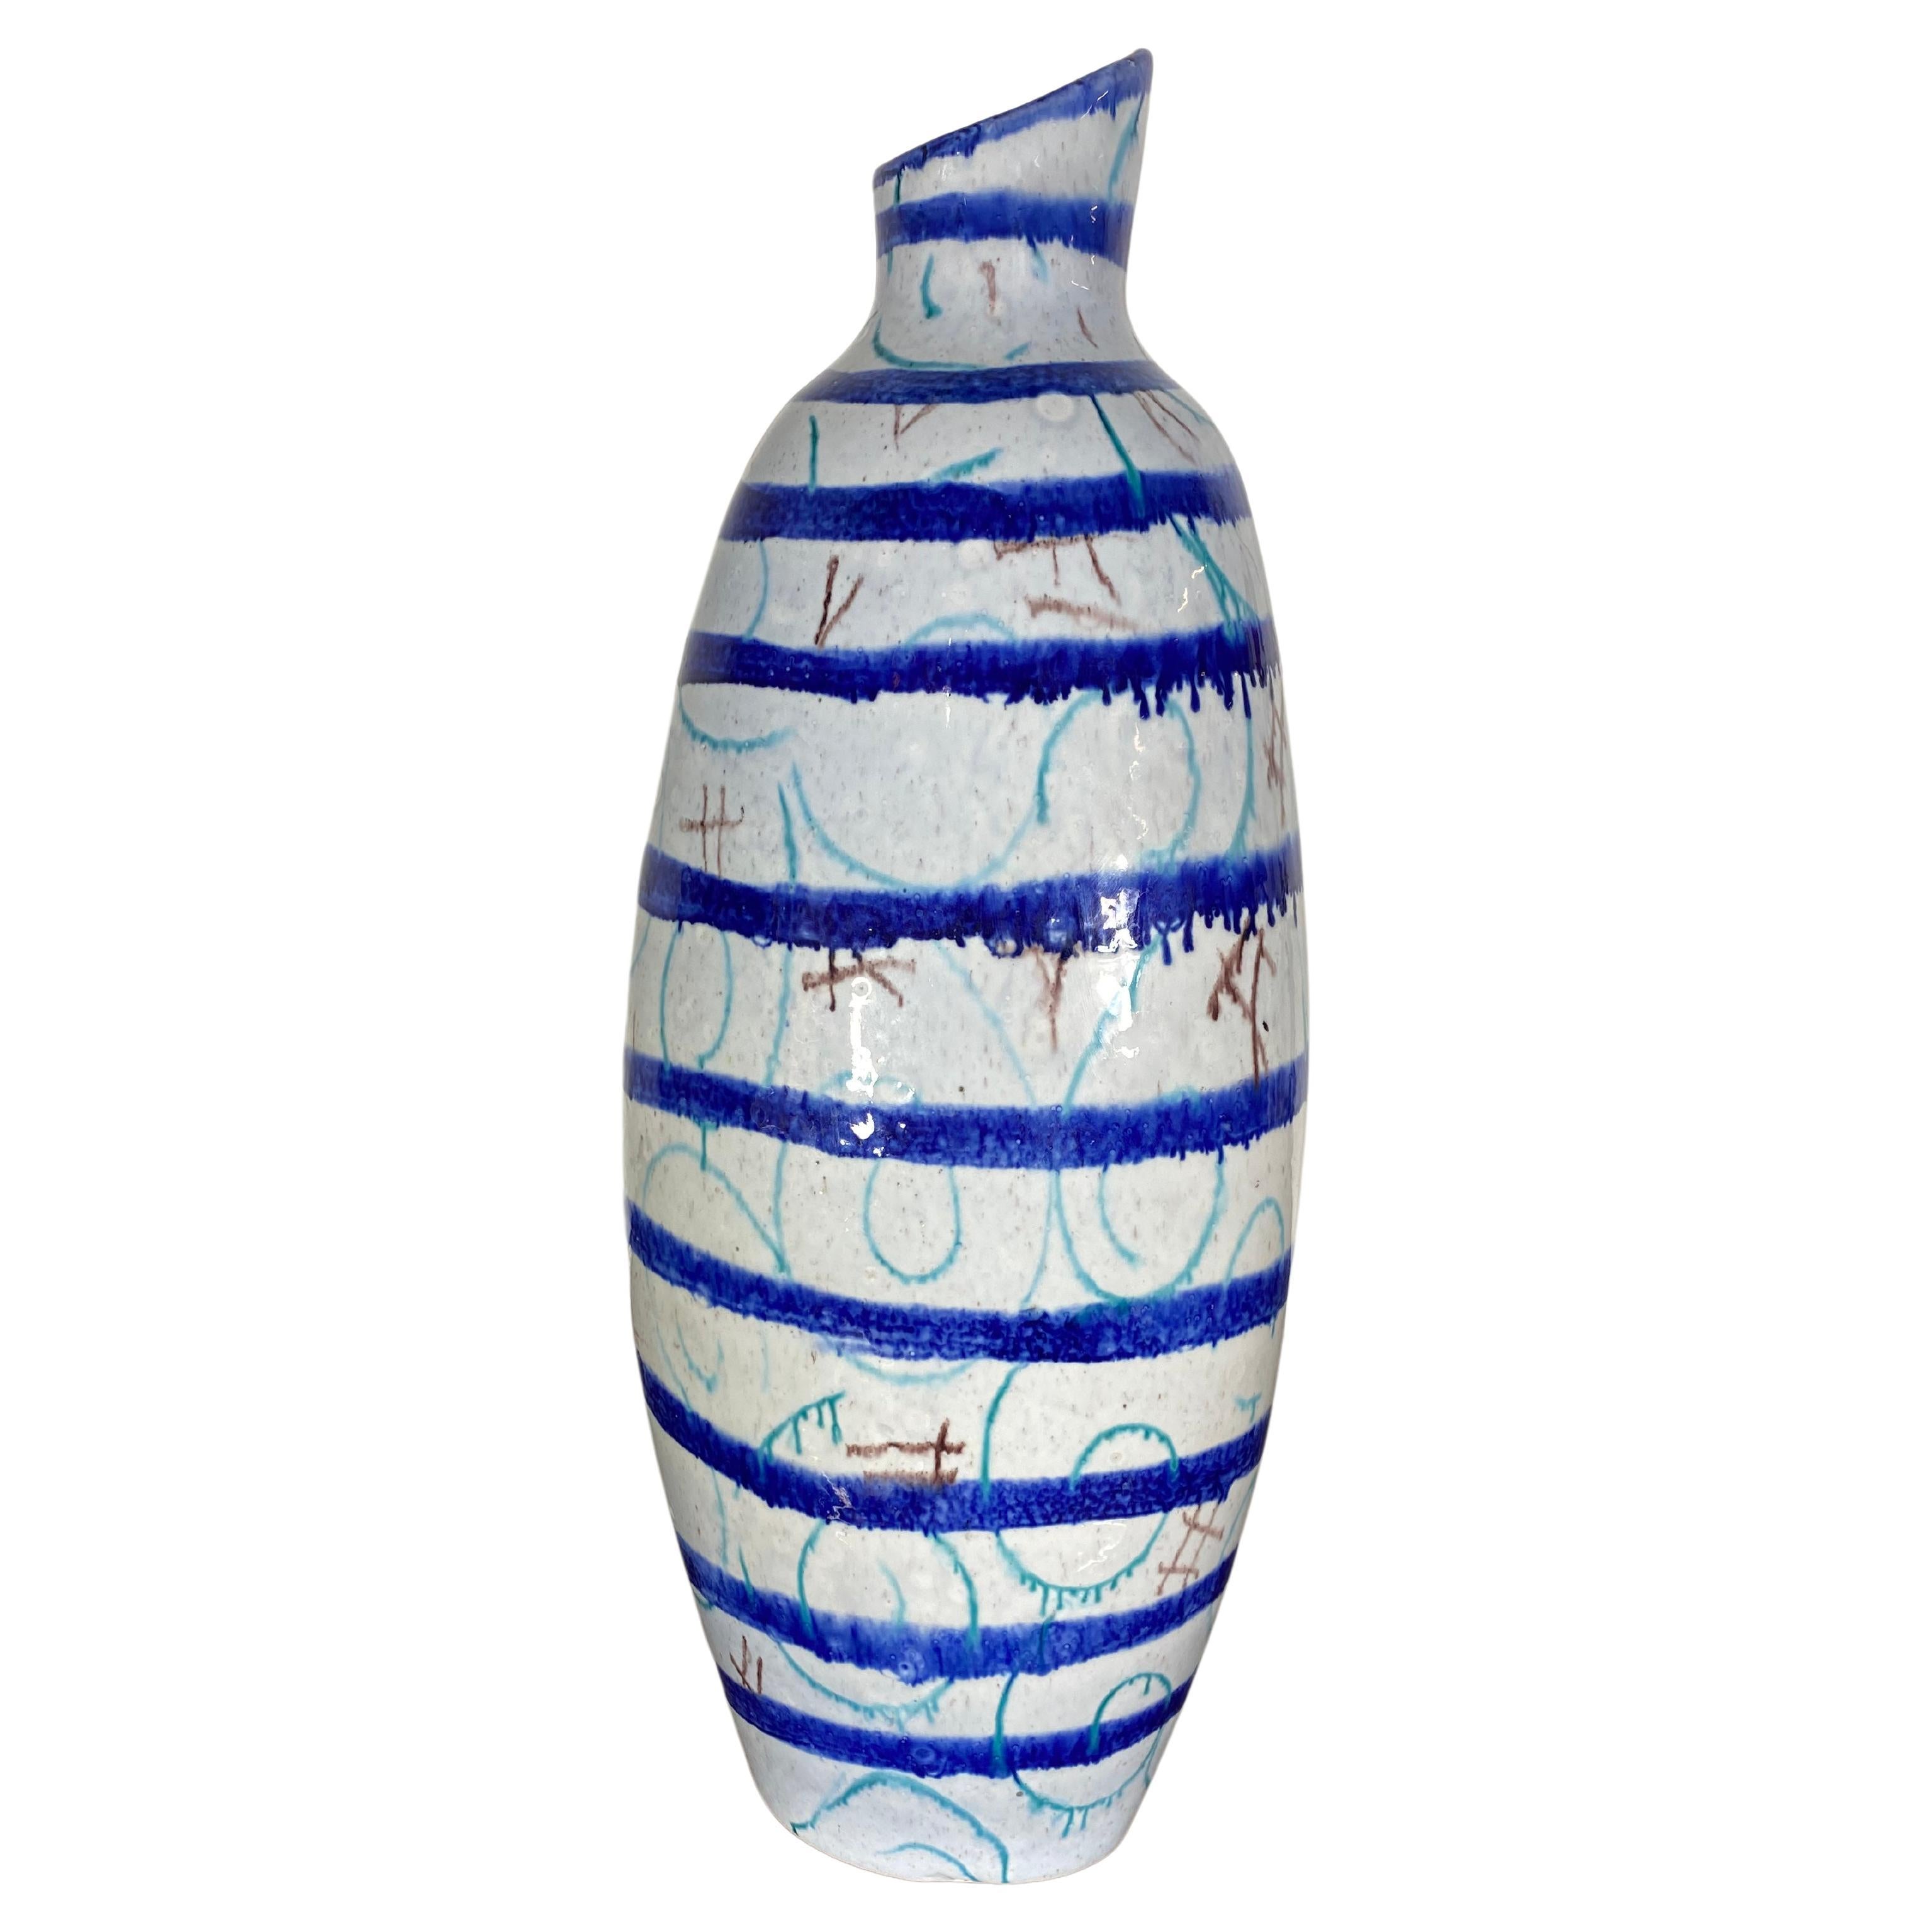 Torviscosa Flasche/ Vase .Classic Italian Modernist Design 